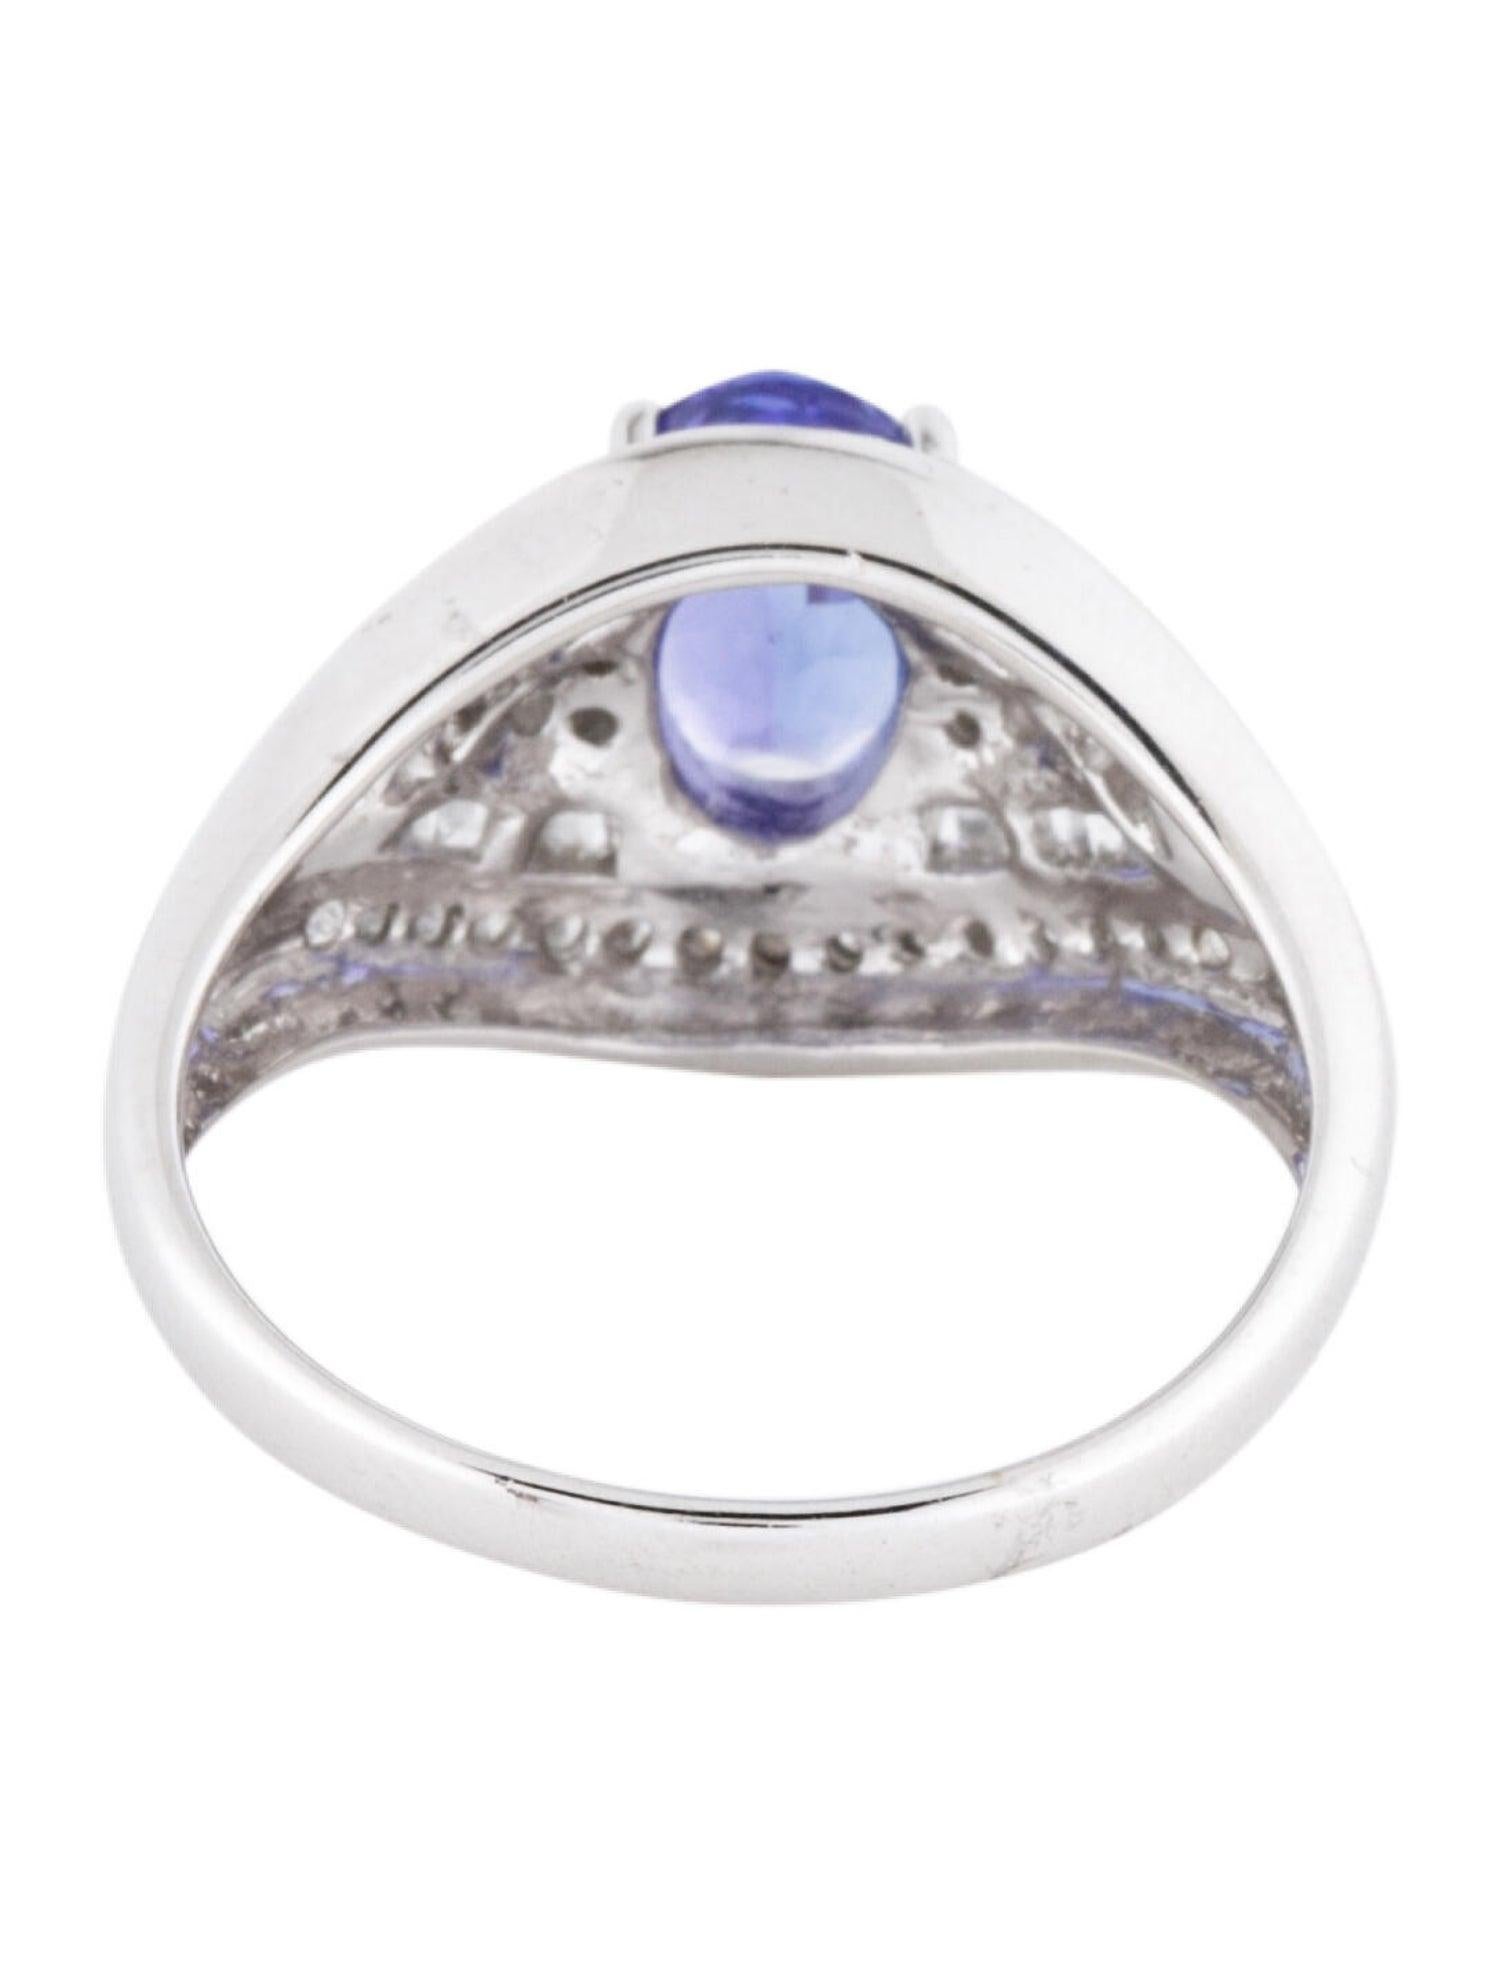 Brilliant Cut 14K Tanzanite & Diamond Ring Size 6.5 Elegant Cocktail Style - Statement Jewelry For Sale